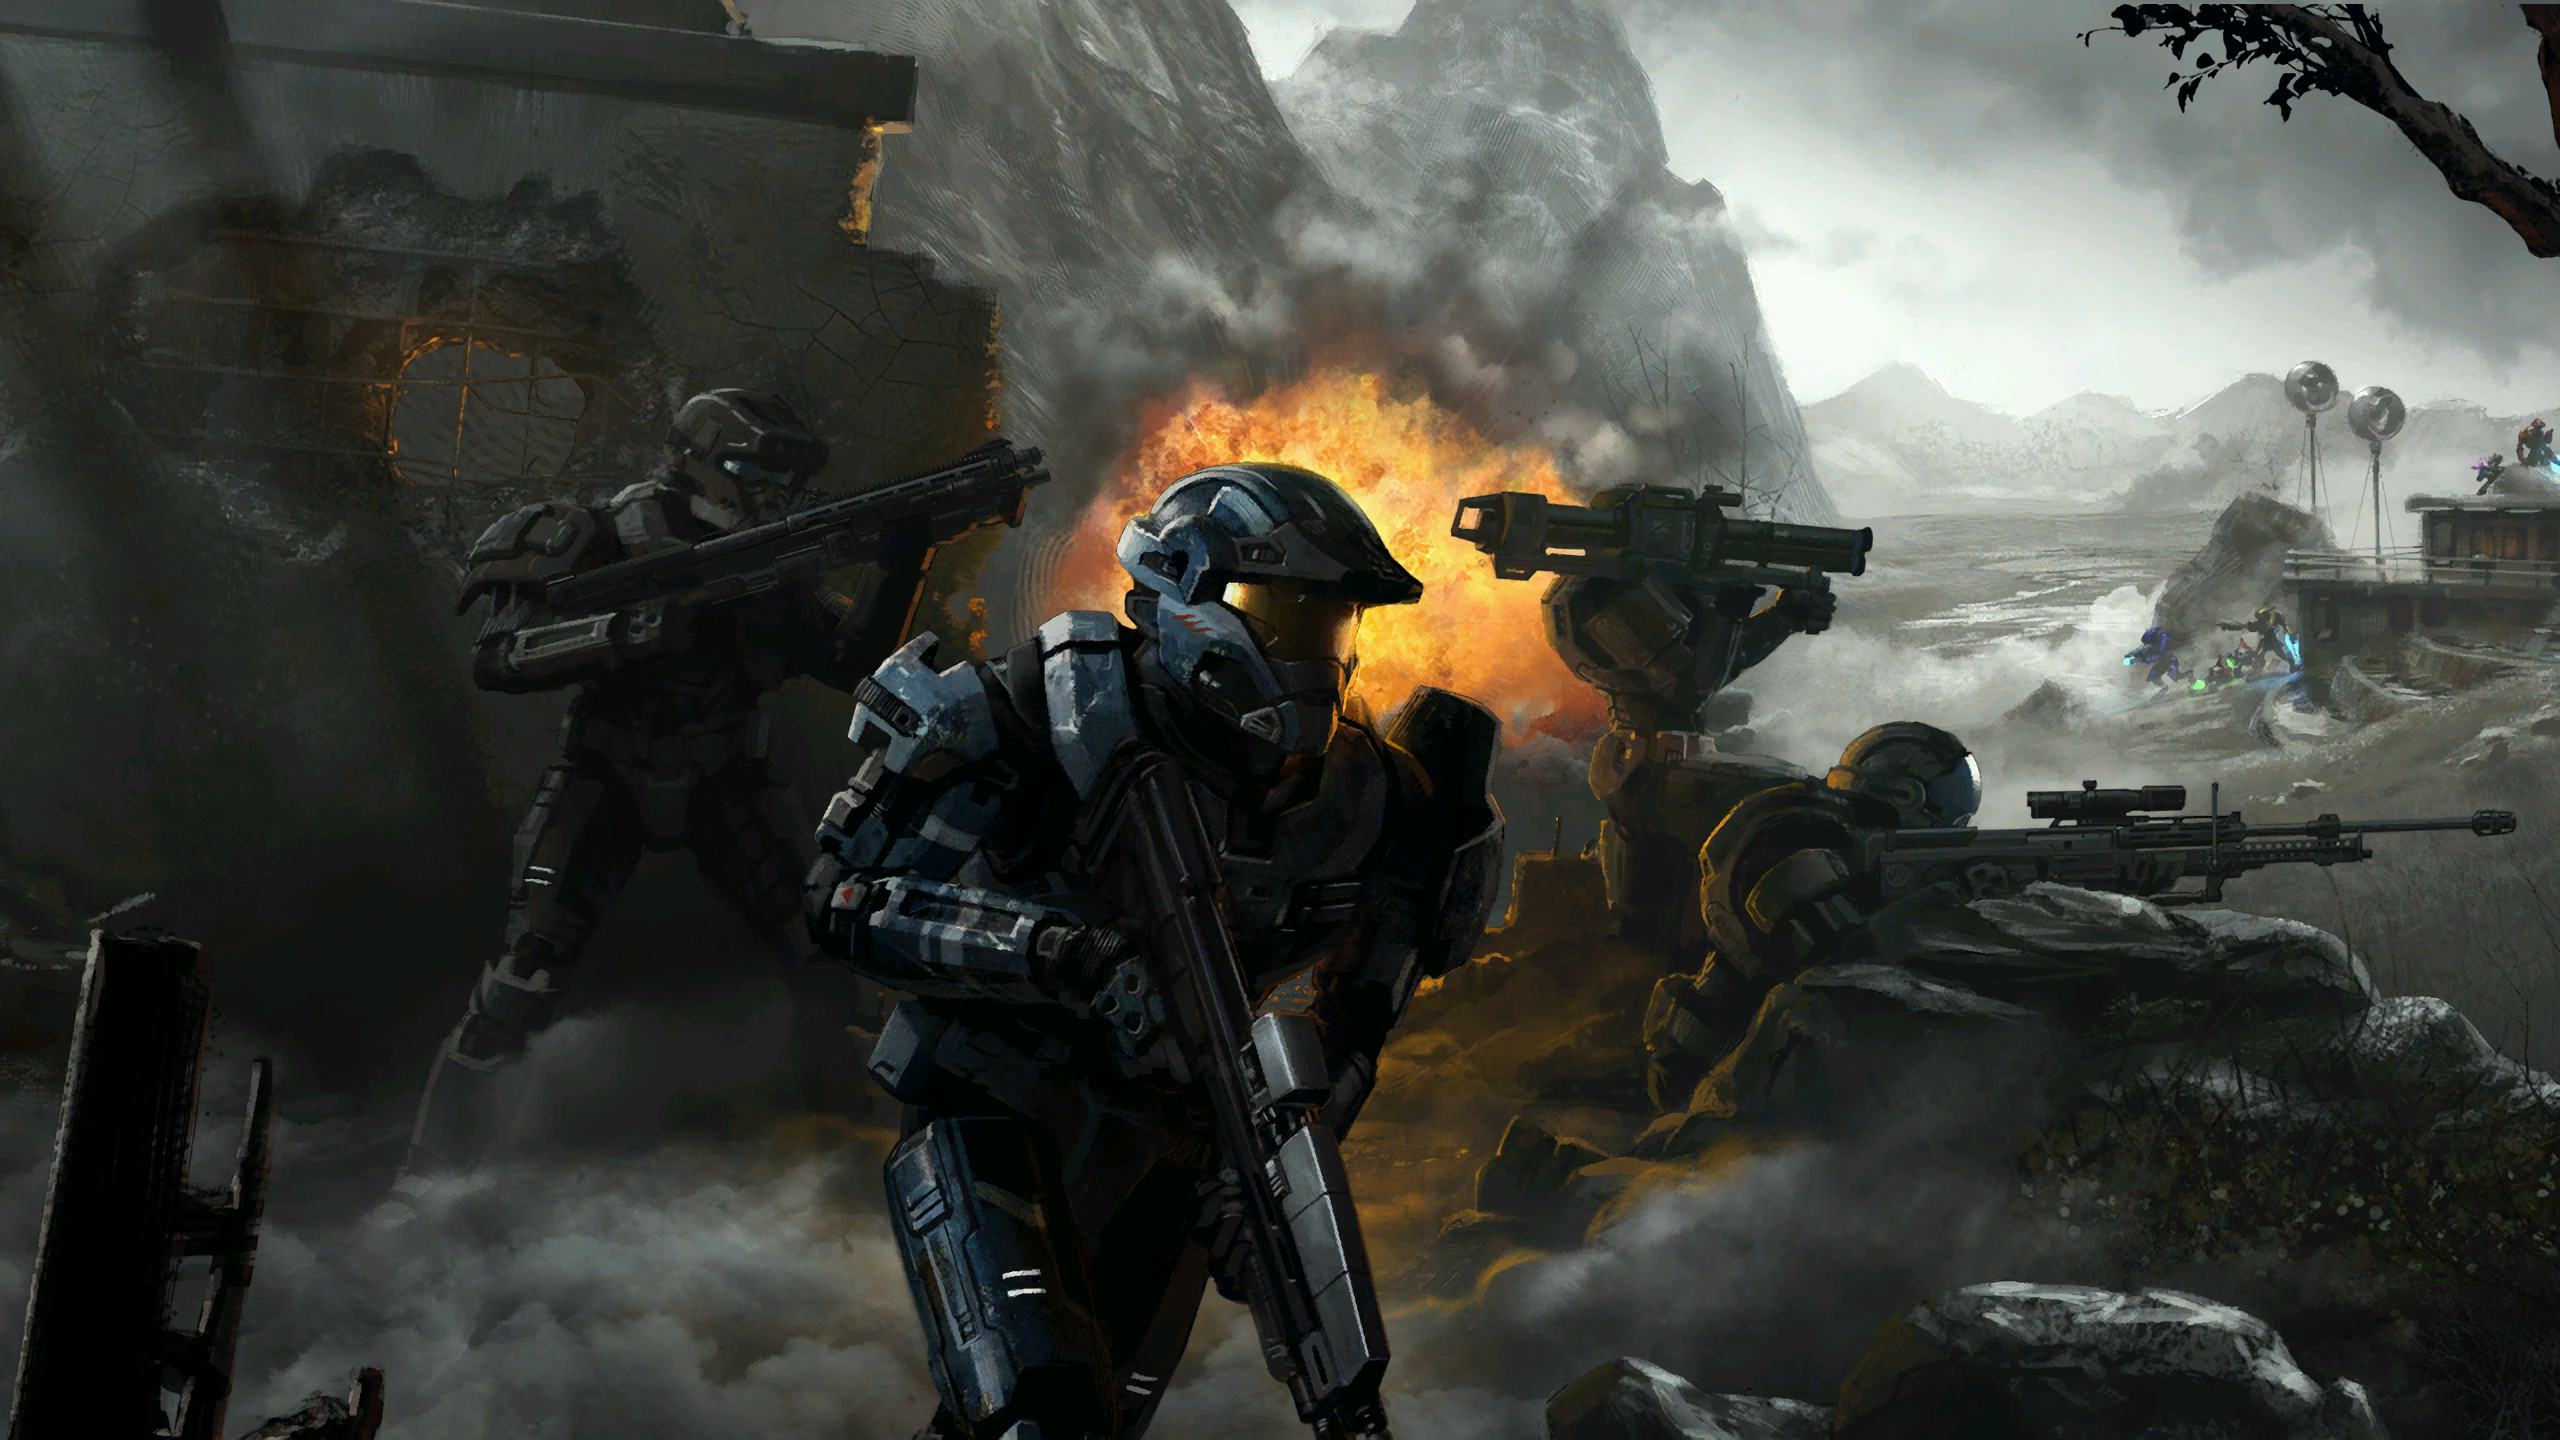 Halo Xbox Video Game Art Halo 3 Halo Reach Science Fiction Covenant Elite Explosion Sniper Rifle Roc 2560x1440